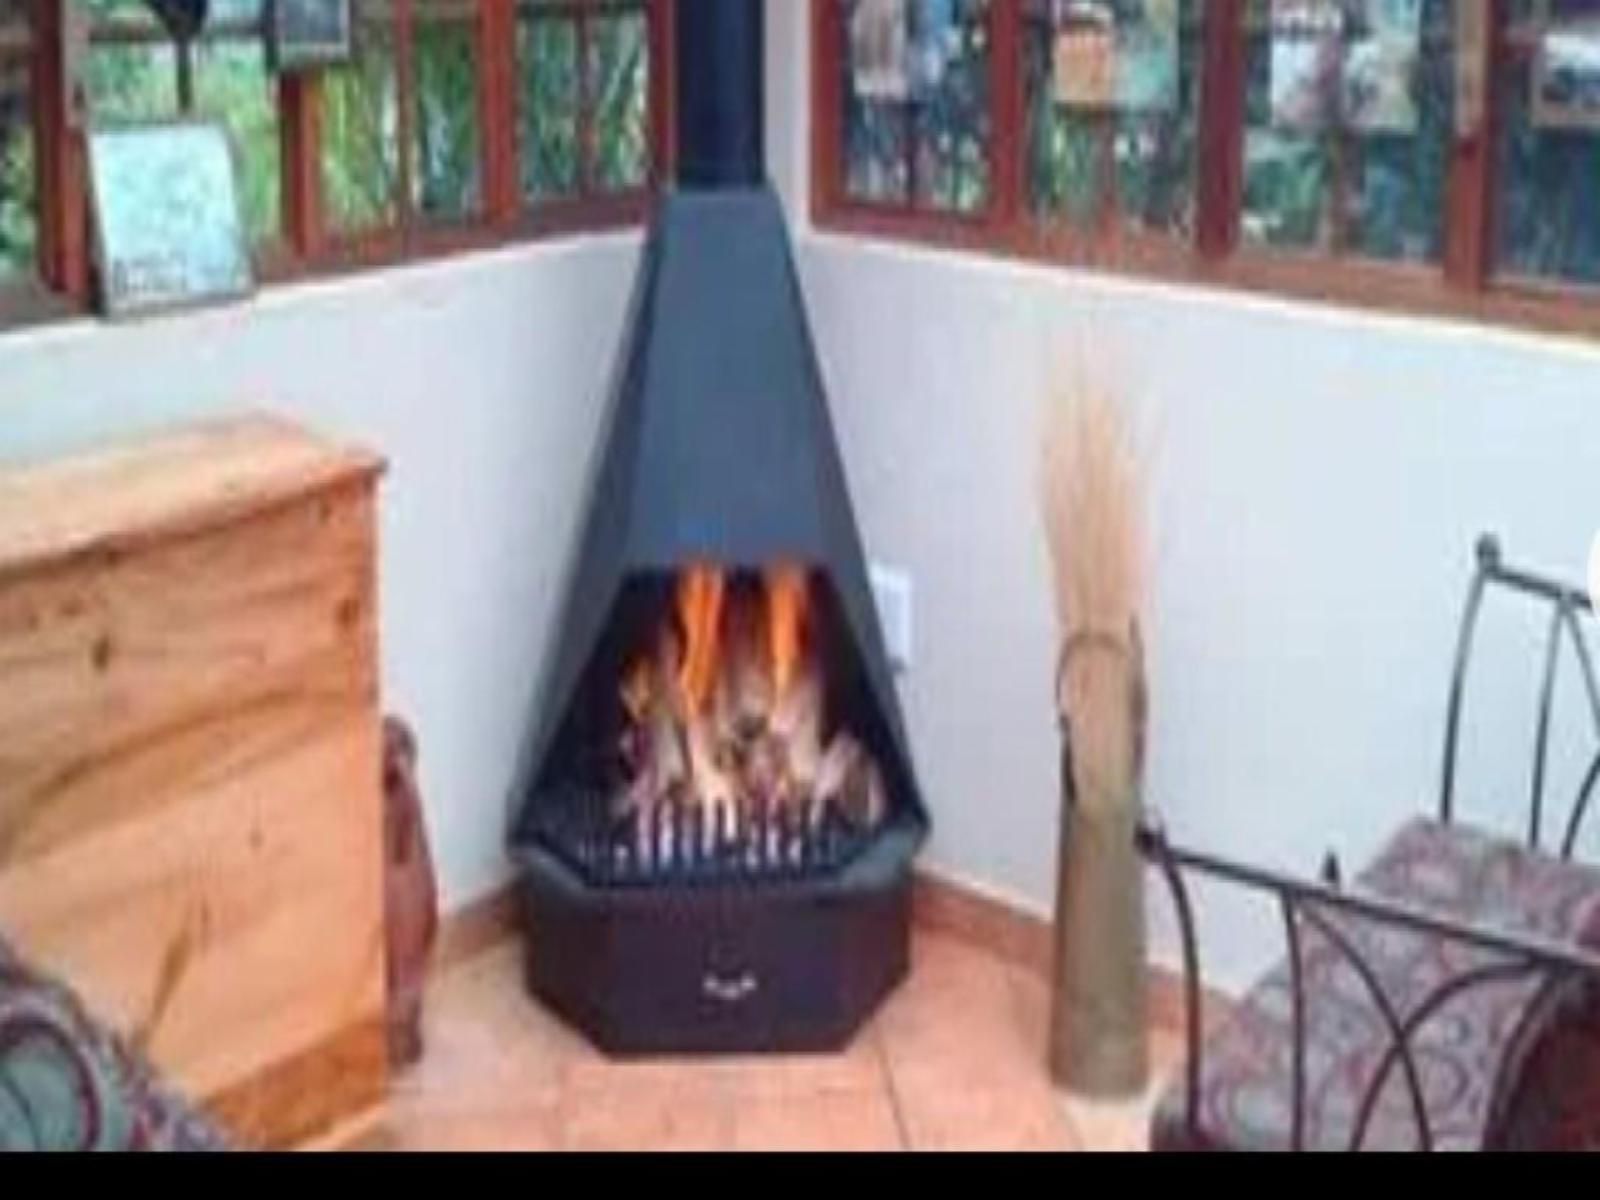 French Lodge International Dormehlsdrift George Western Cape South Africa Fire, Nature, Fireplace, Sauna, Wood